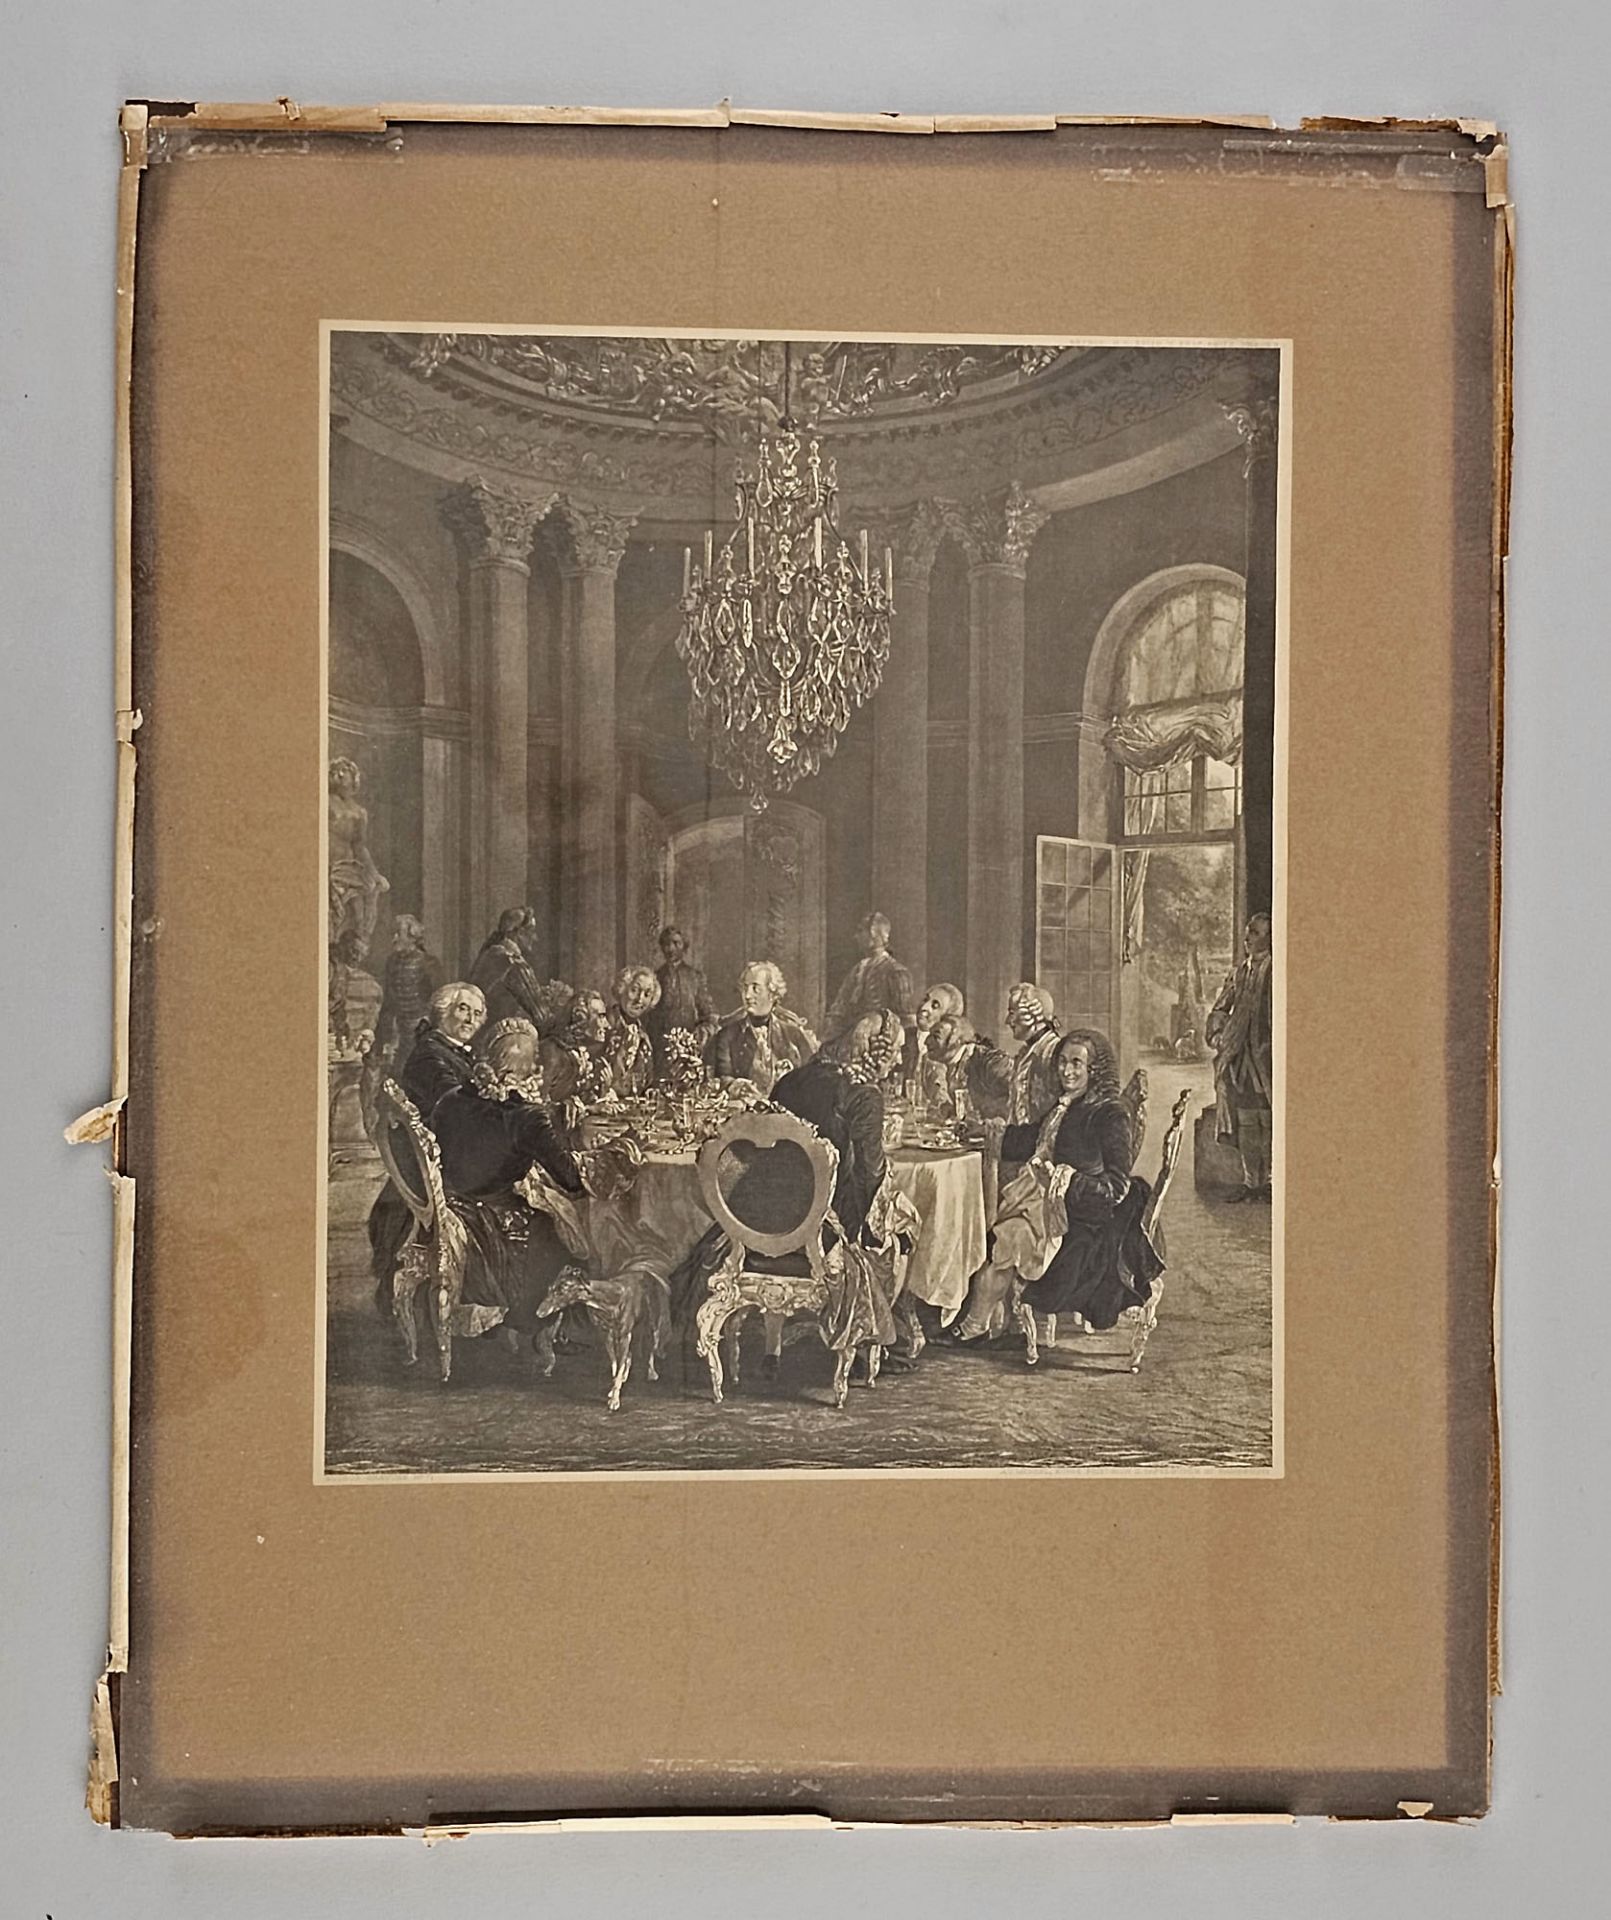 Menzel, Friedrich II. Tafelrunde in Sanssouci